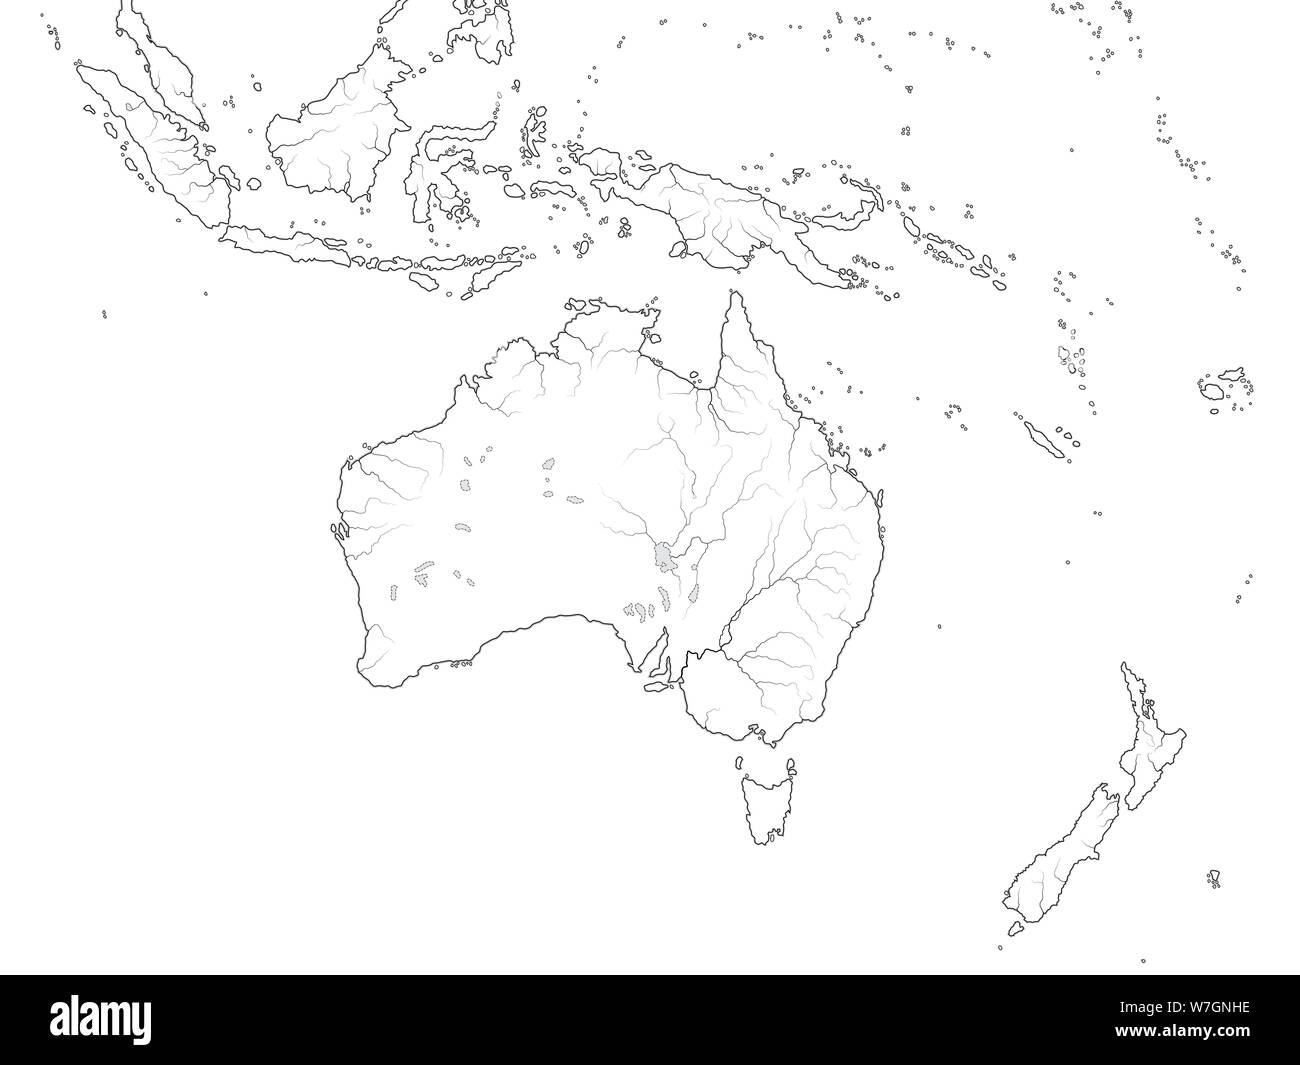 World Map of AUSTRALASIA REGION: Australia, New Guinea, New Zealand, Oceania, Indonesia, Polynesia, Pacific Ocean. Geographic chart with coastline. Stock Photo